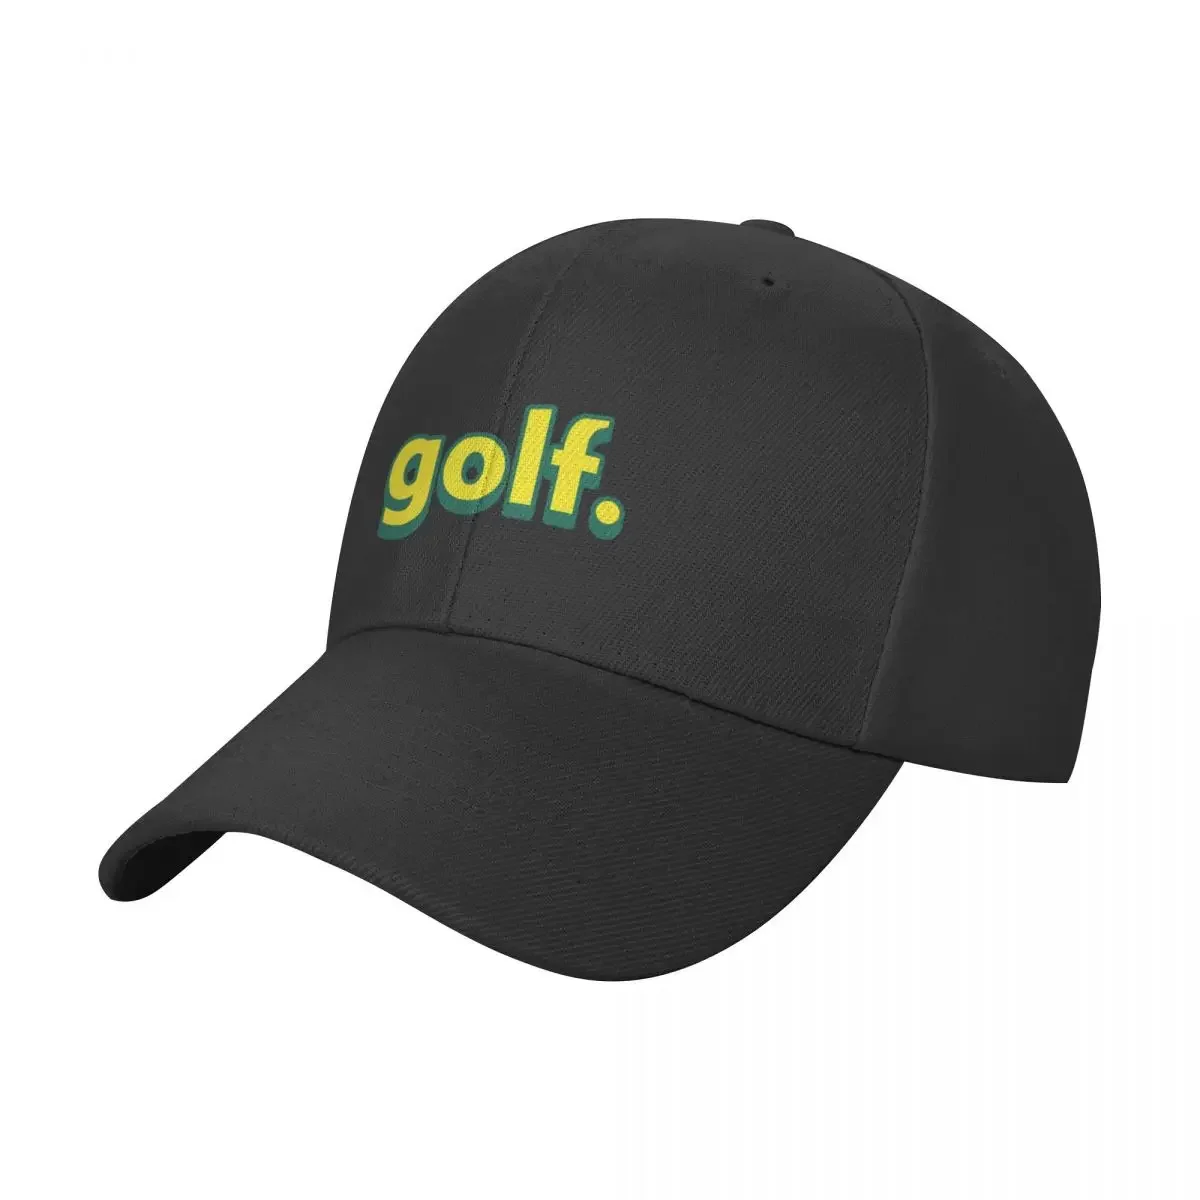 

golf - Funny Golf Baseball Cap Sun Hat For Children Trucker Hat Icon New In The Hat Hats For Women Men's